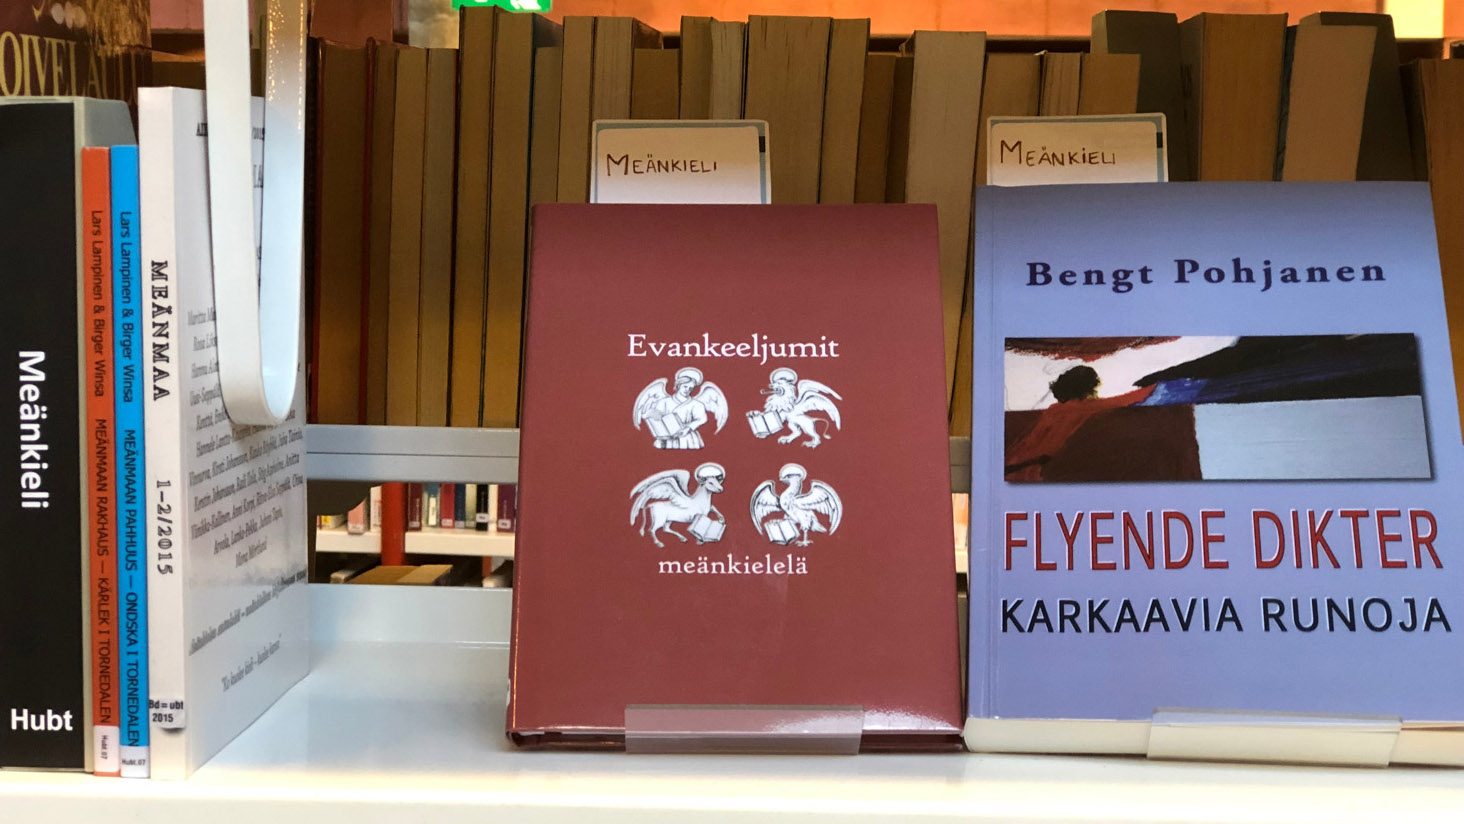 A book shelf with books in meänkieli.